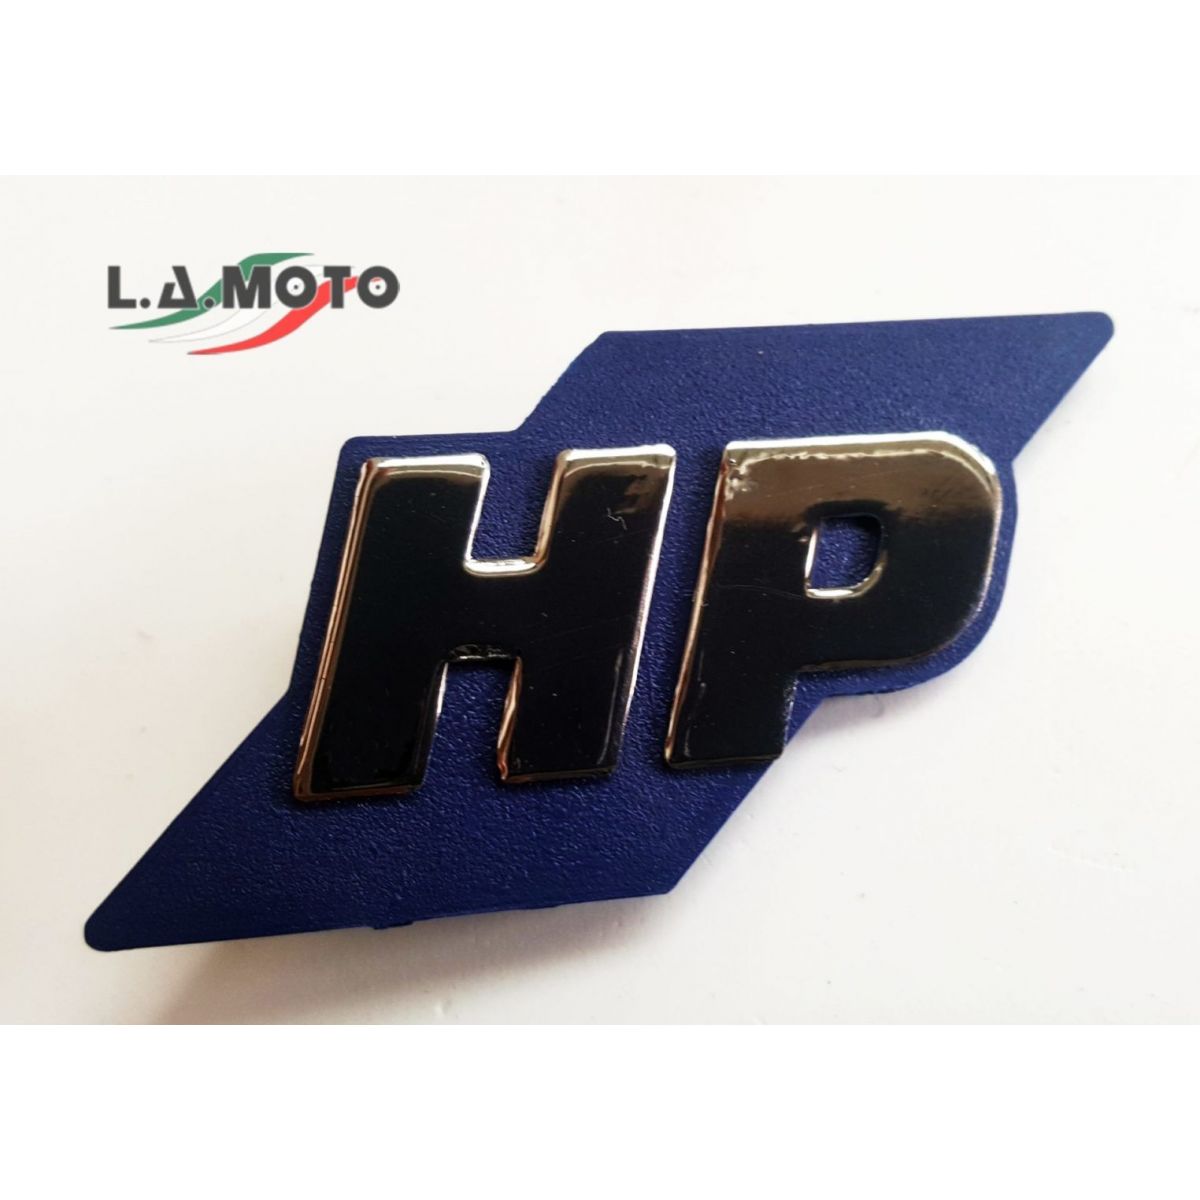 Targhetta HP in plastica ABS per bauletto VESPA 50 FL FL2 HP r.o. 259394